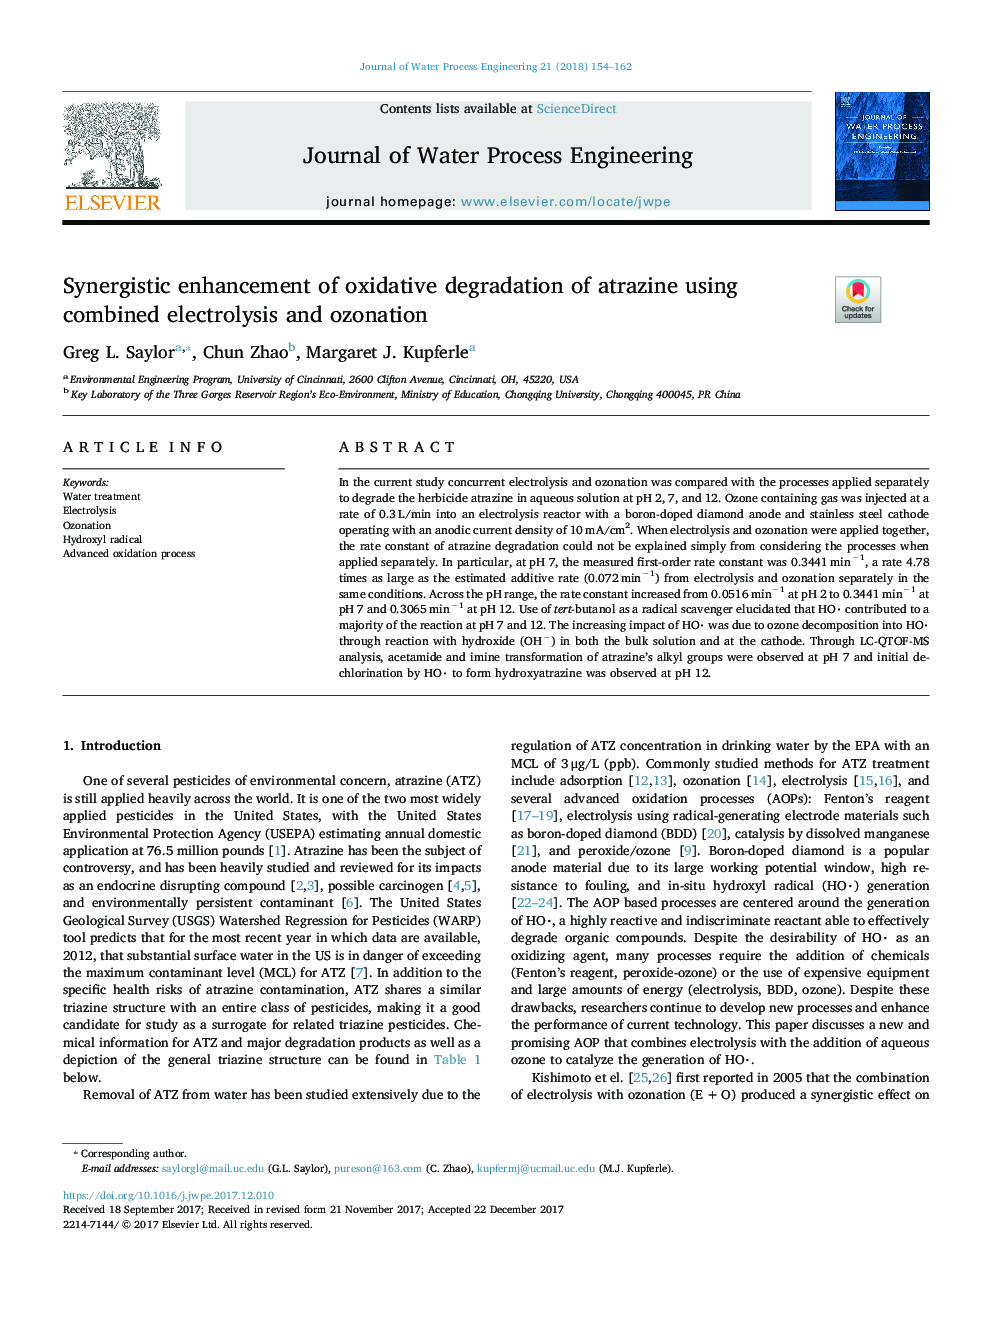 Synergistic enhancement of oxidative degradation of atrazine using combined electrolysis and ozonation